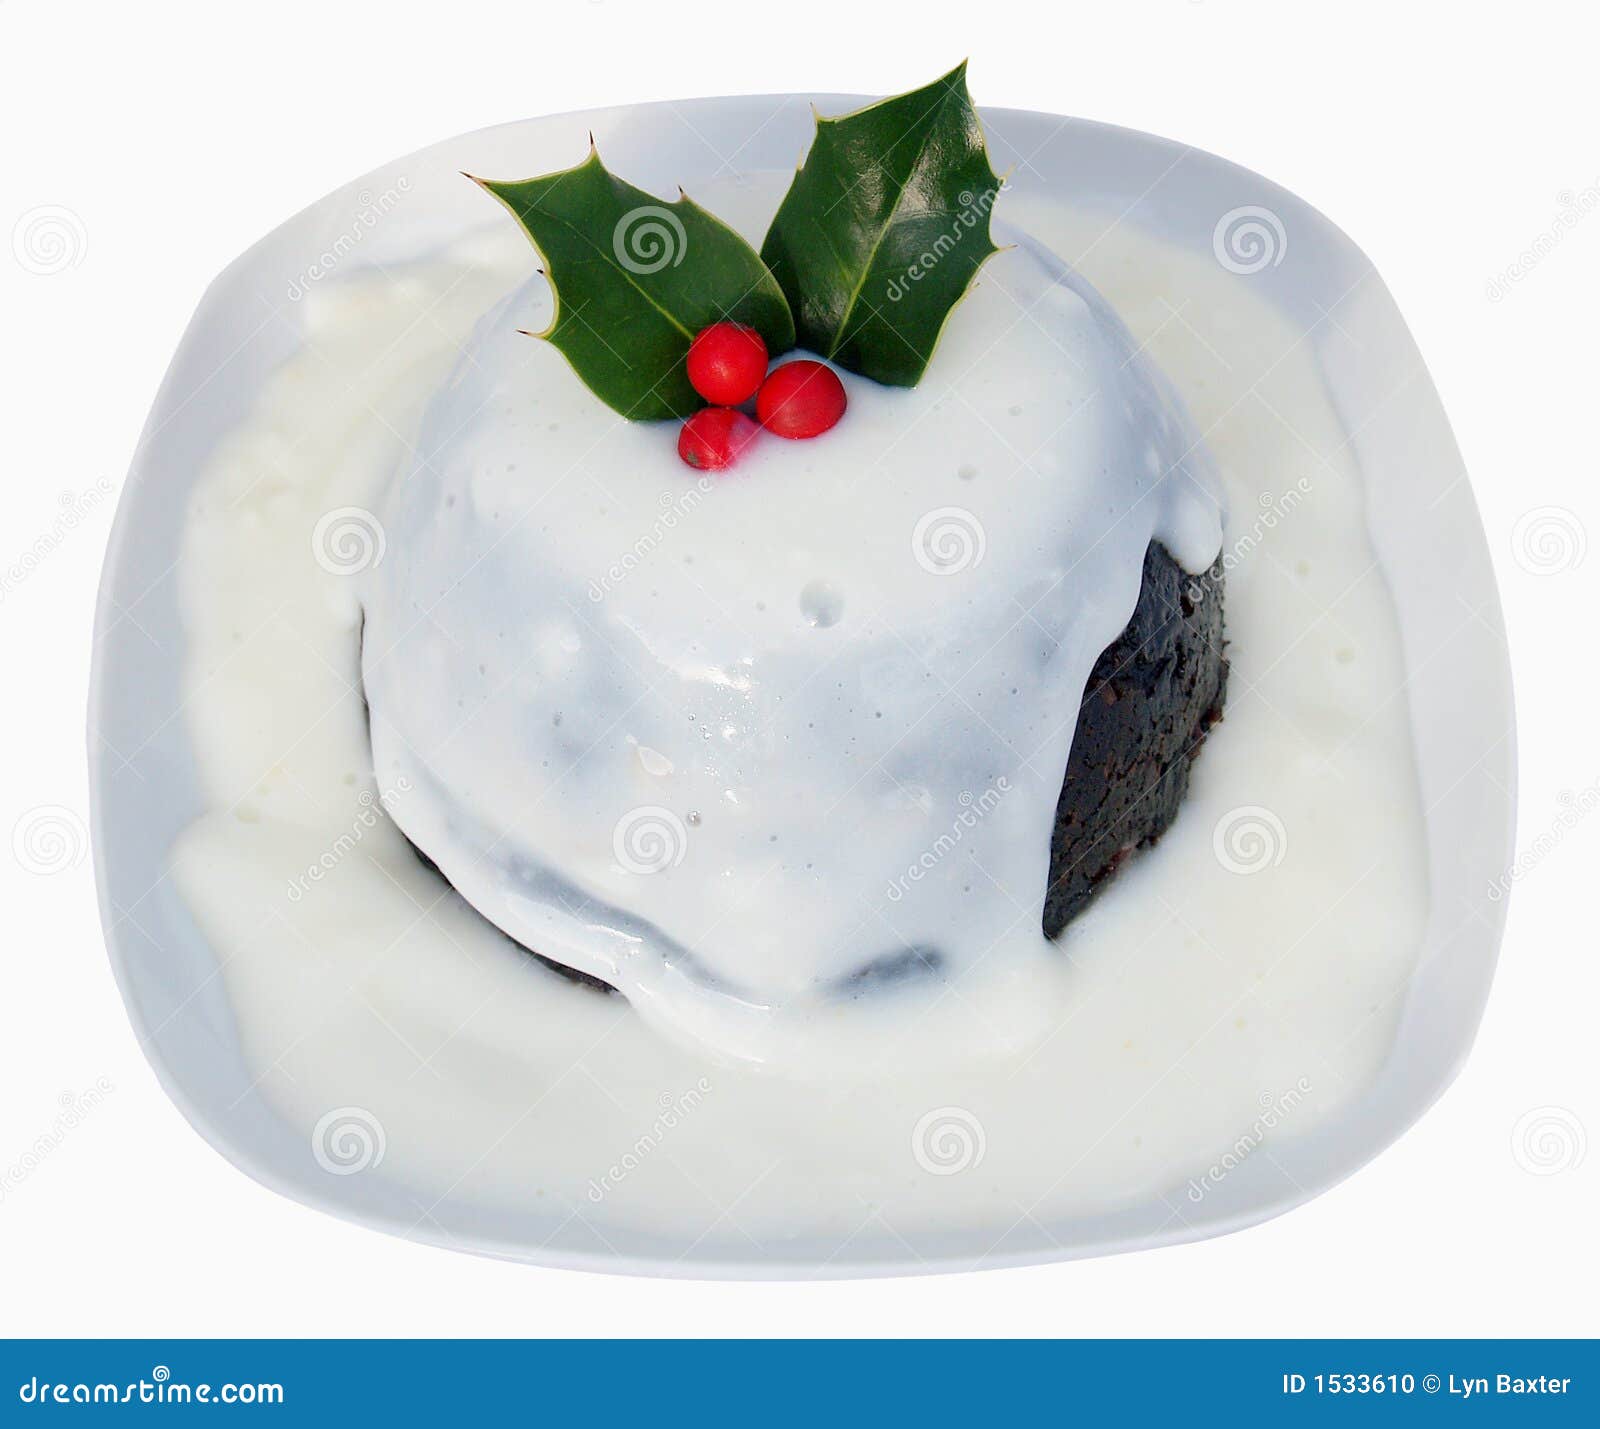 「 圣诞月特辑 」：圣诞布丁 | Christmas pudding - 知乎